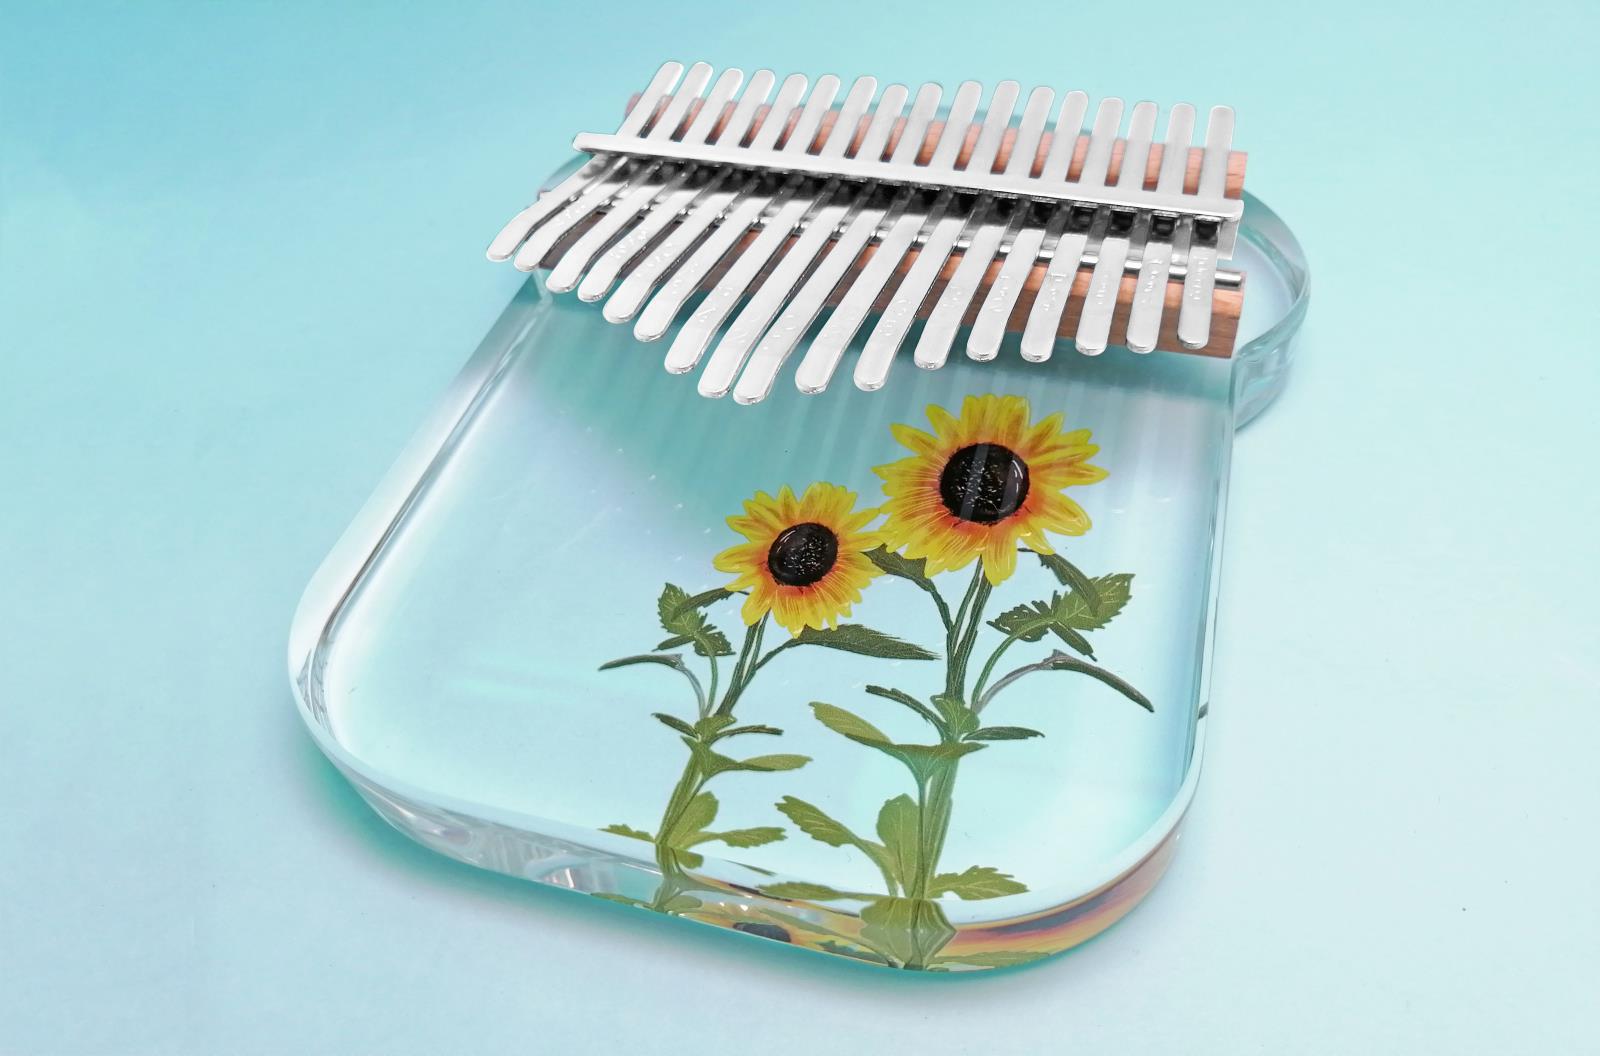 17 key Acrylic Transparent Kalimbas Featuring Sunflowers - Relaxation Studio